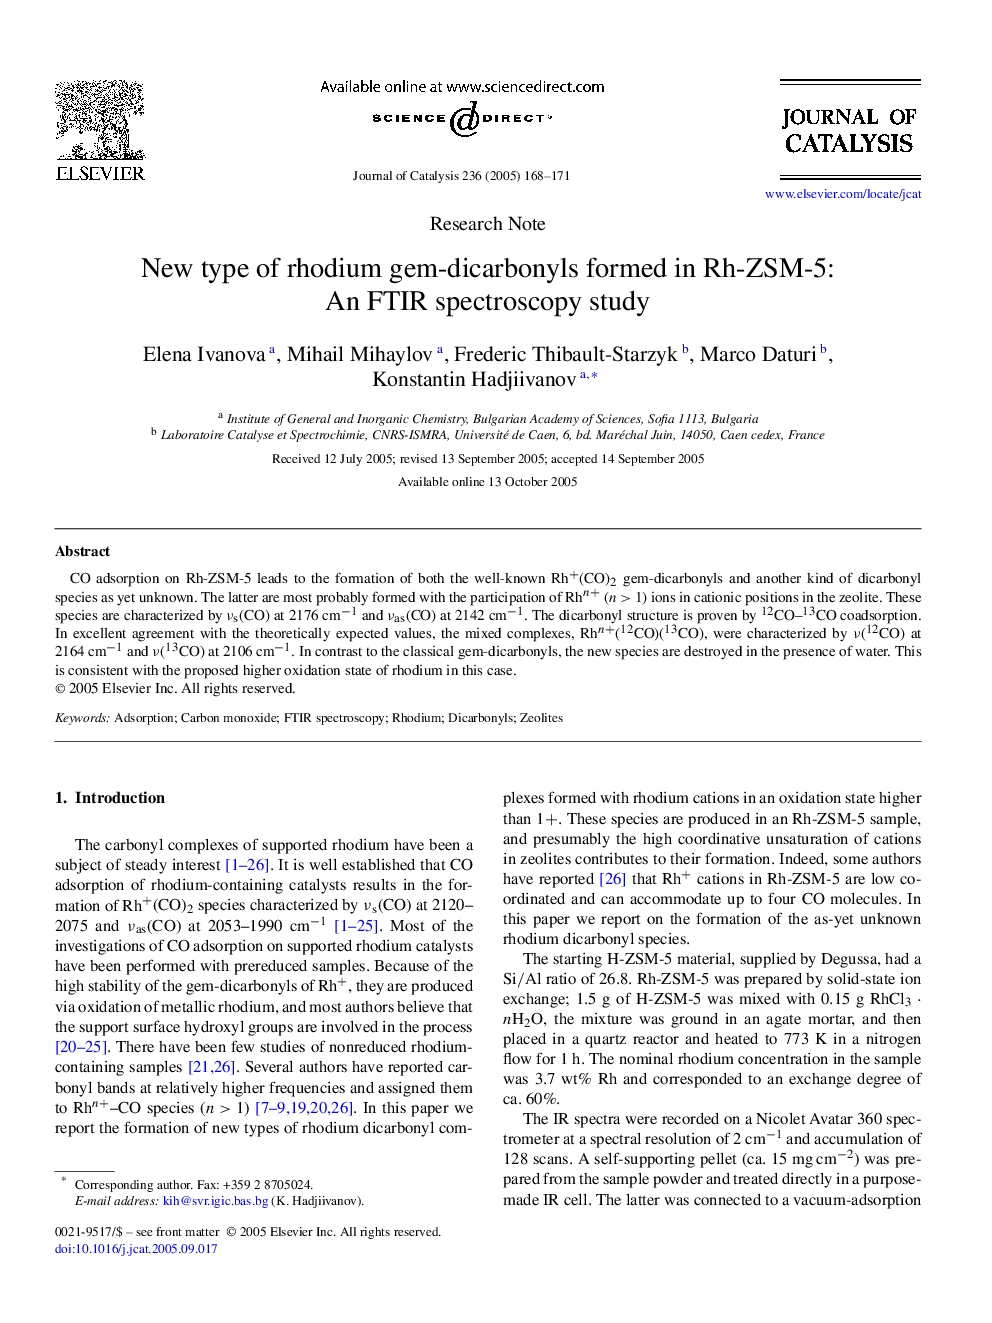 New type of rhodium gem-dicarbonyls formed in Rh-ZSM-5: An FTIR spectroscopy study